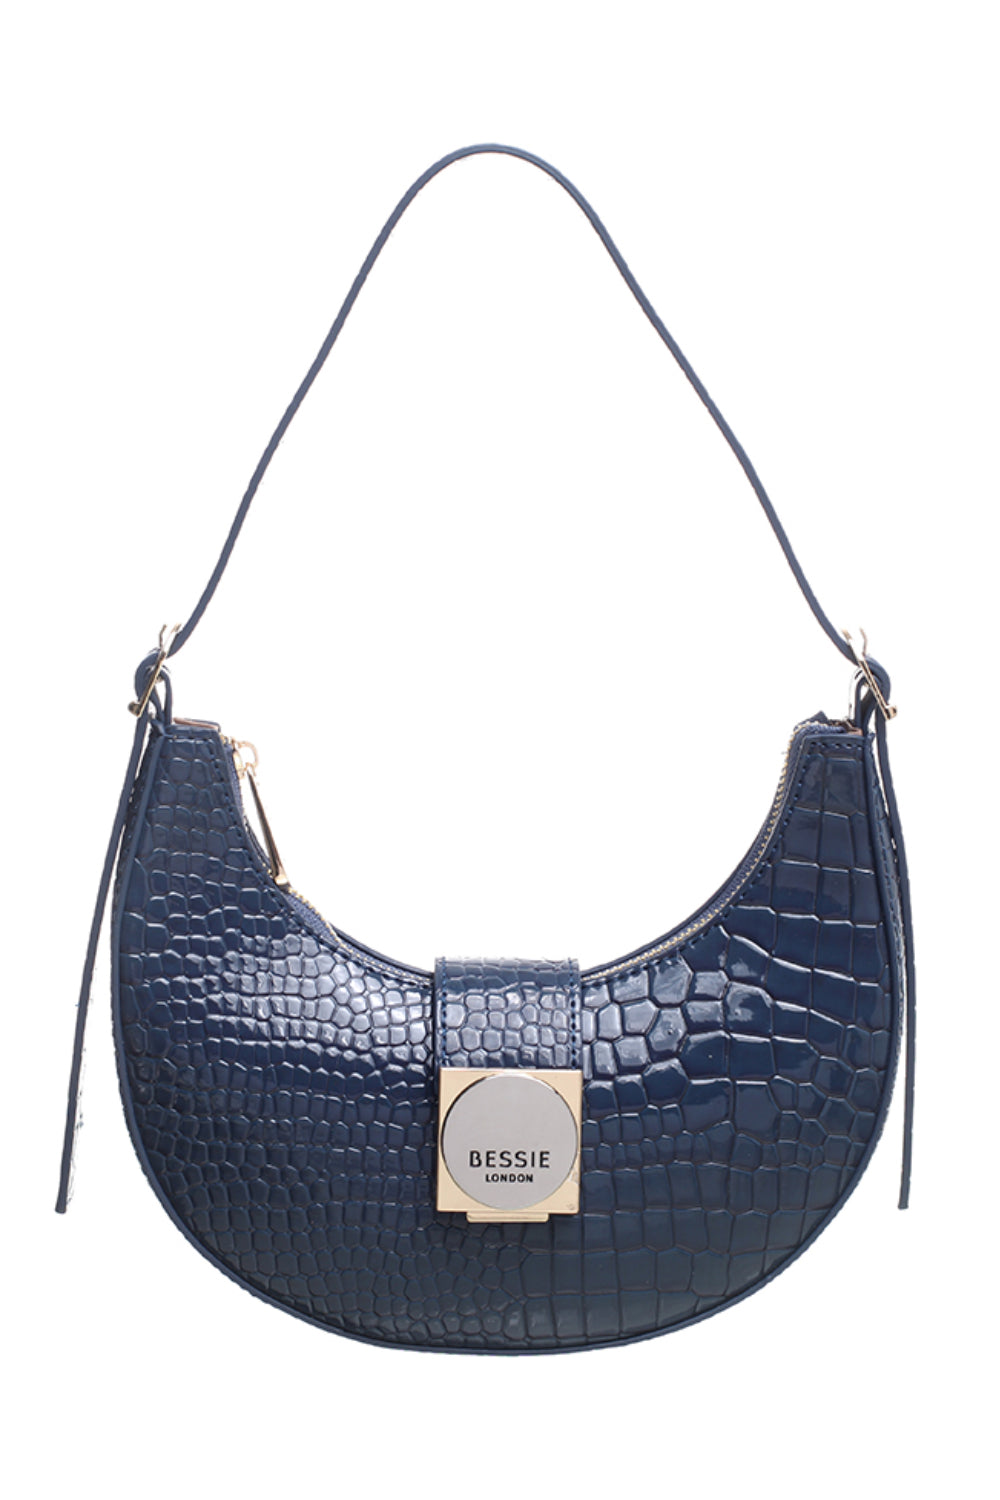 Bessie-Handbags-Mini-Cresent-Shape-Mock-Croc-Bag-Navy-djv-boutique